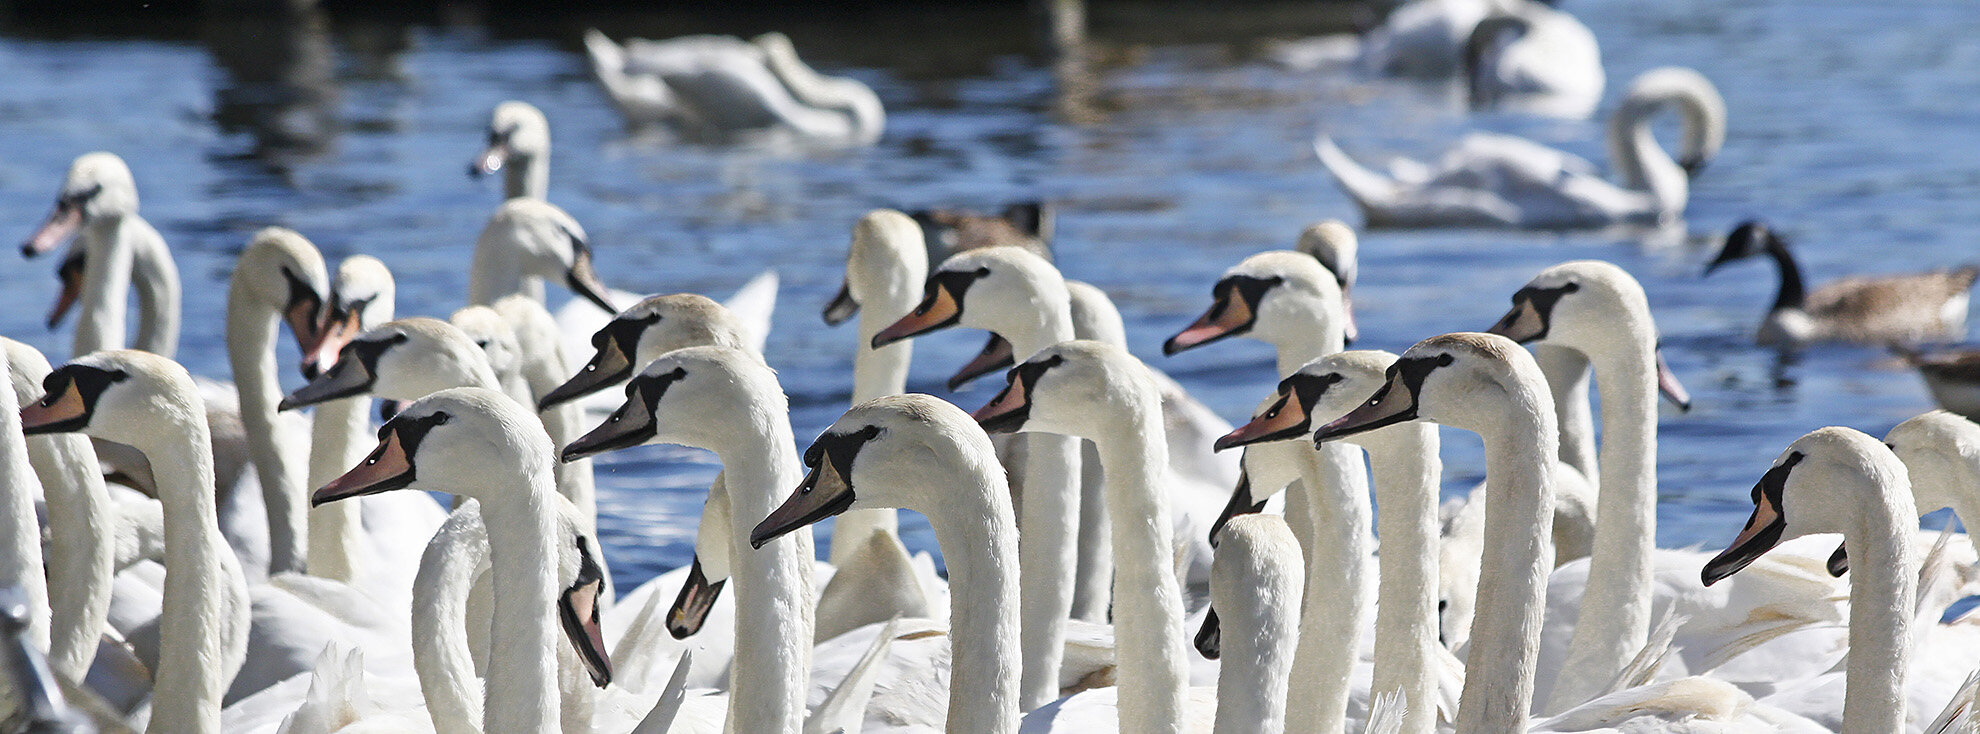 Swans+in+Kingston.jpg